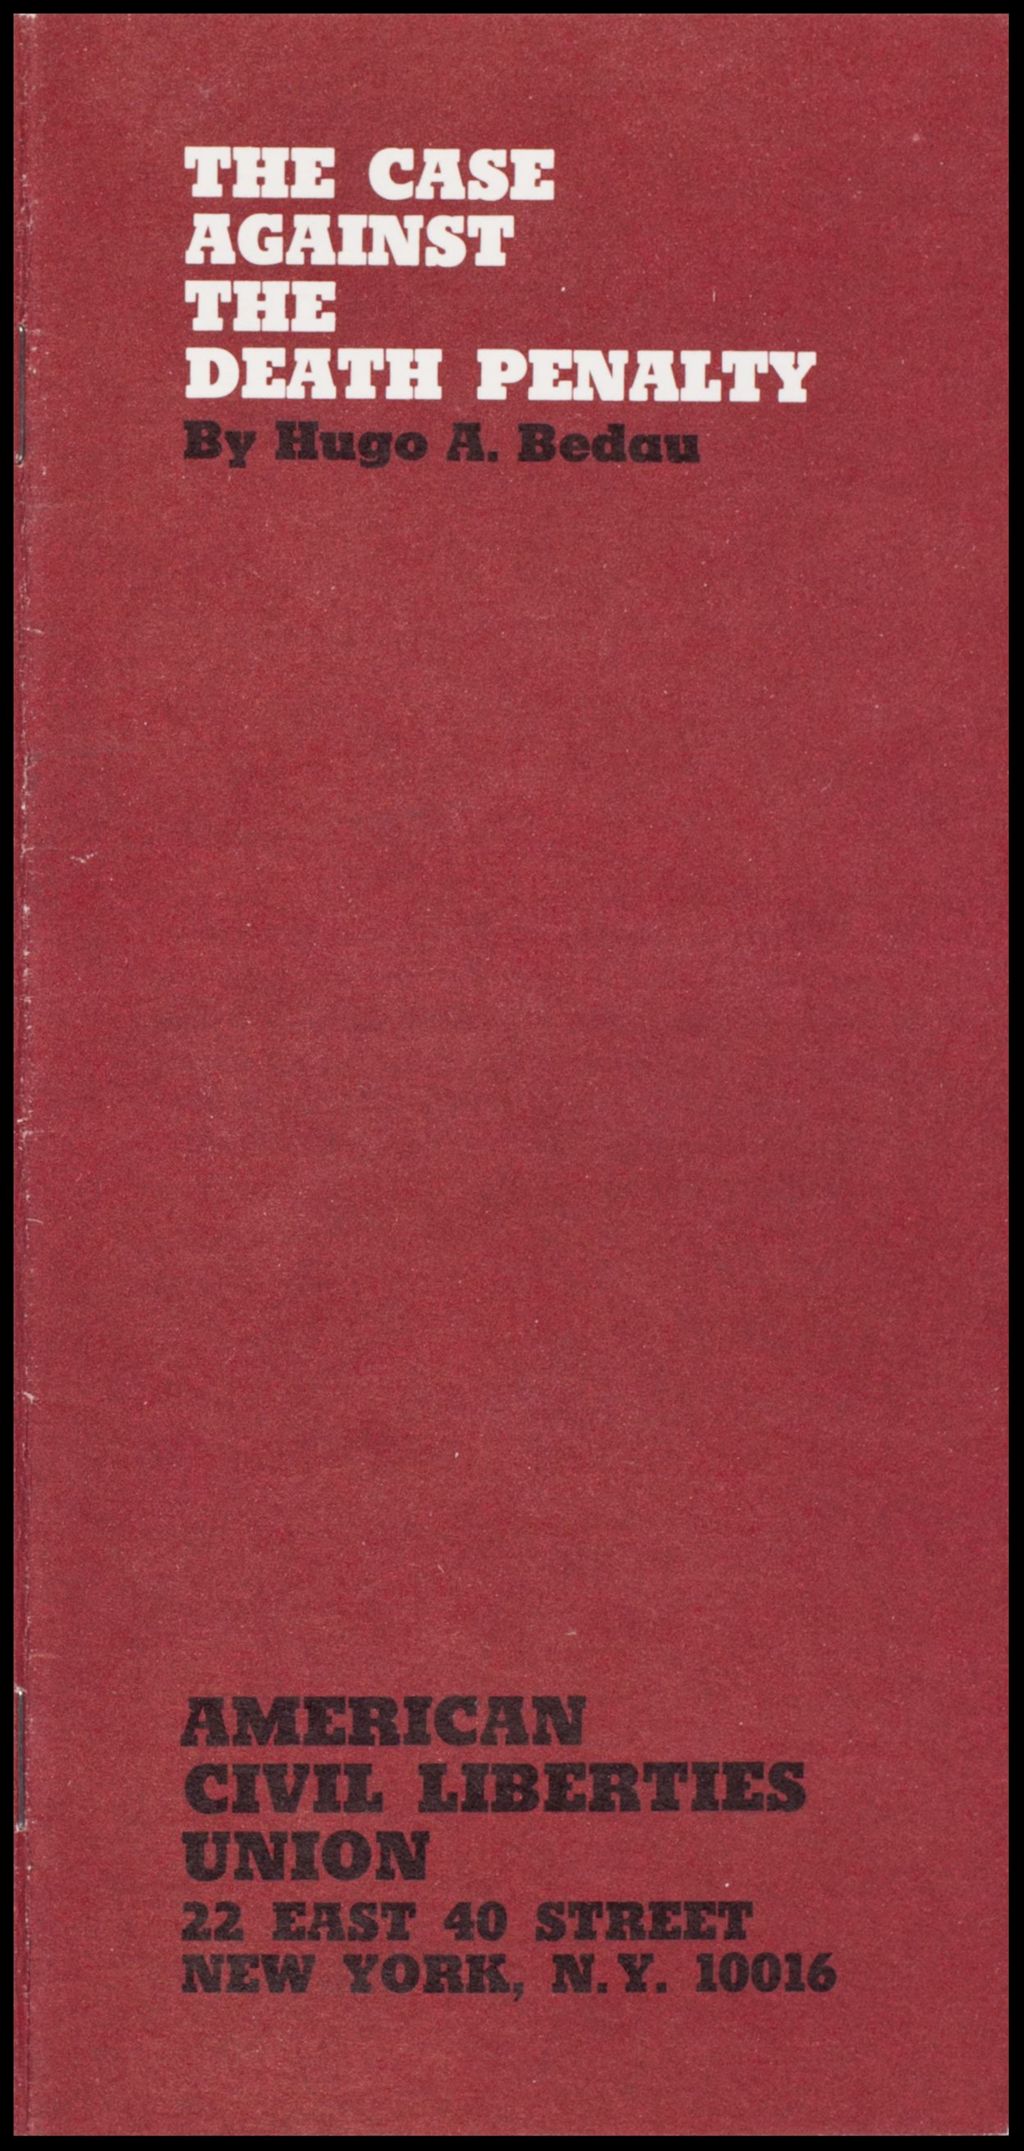 Miscellaneous Pamphlets Criminal Justice, 1975-1976 (Folder III-1941)